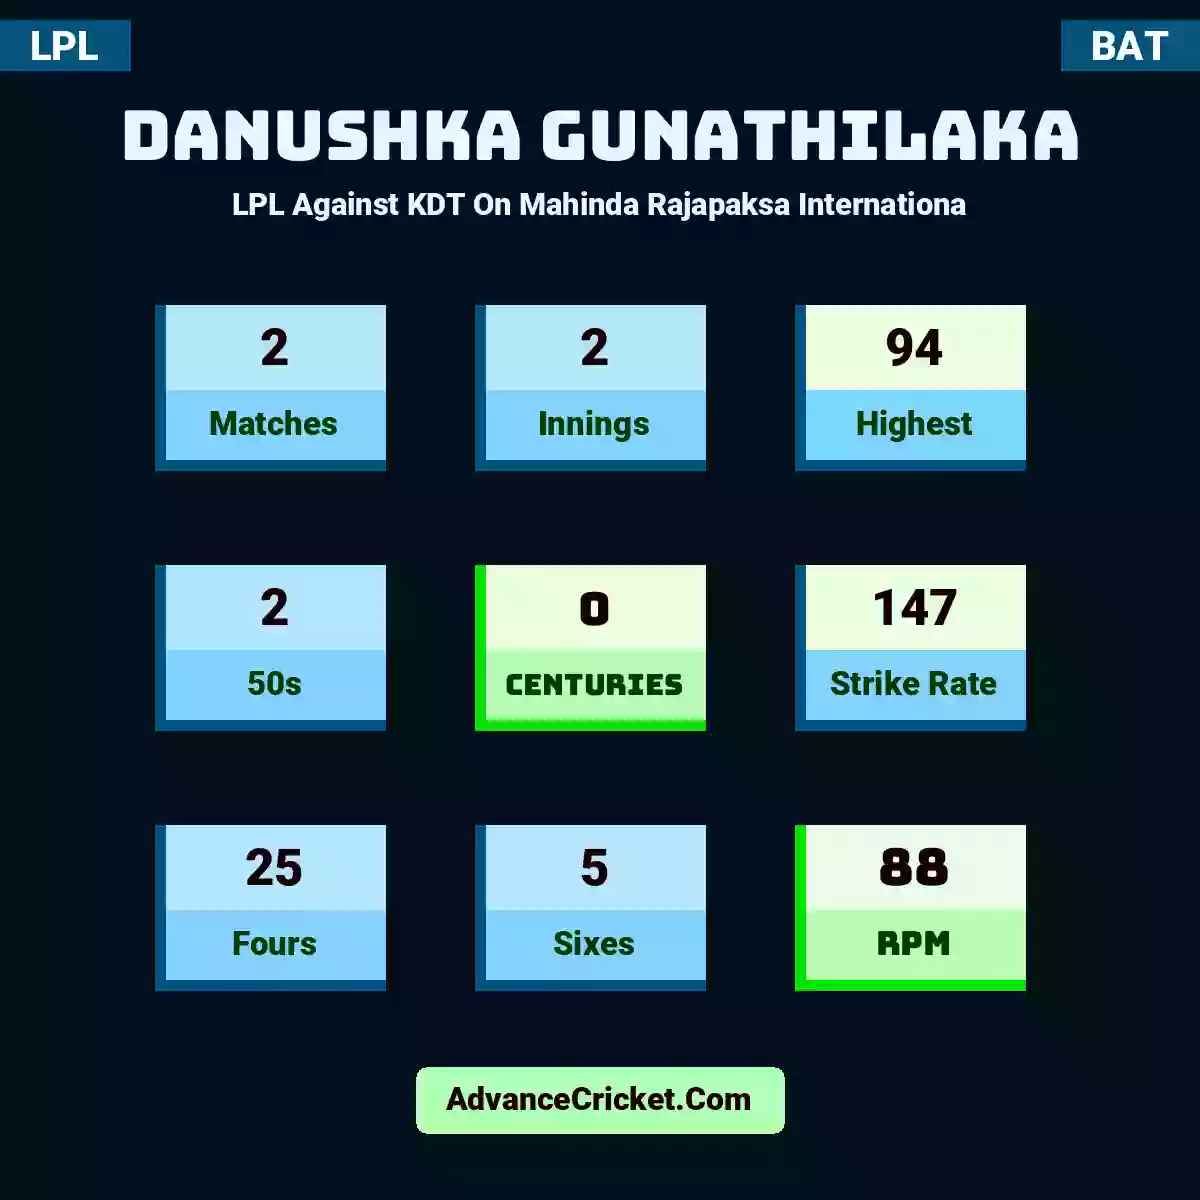 Danushka Gunathilaka LPL  Against KDT On Mahinda Rajapaksa Internationa, Danushka Gunathilaka played 2 matches, scored 94 runs as highest, 2 half-centuries, and 0 centuries, with a strike rate of 147. D.Gunathilaka hit 25 fours and 5 sixes, with an RPM of 88.